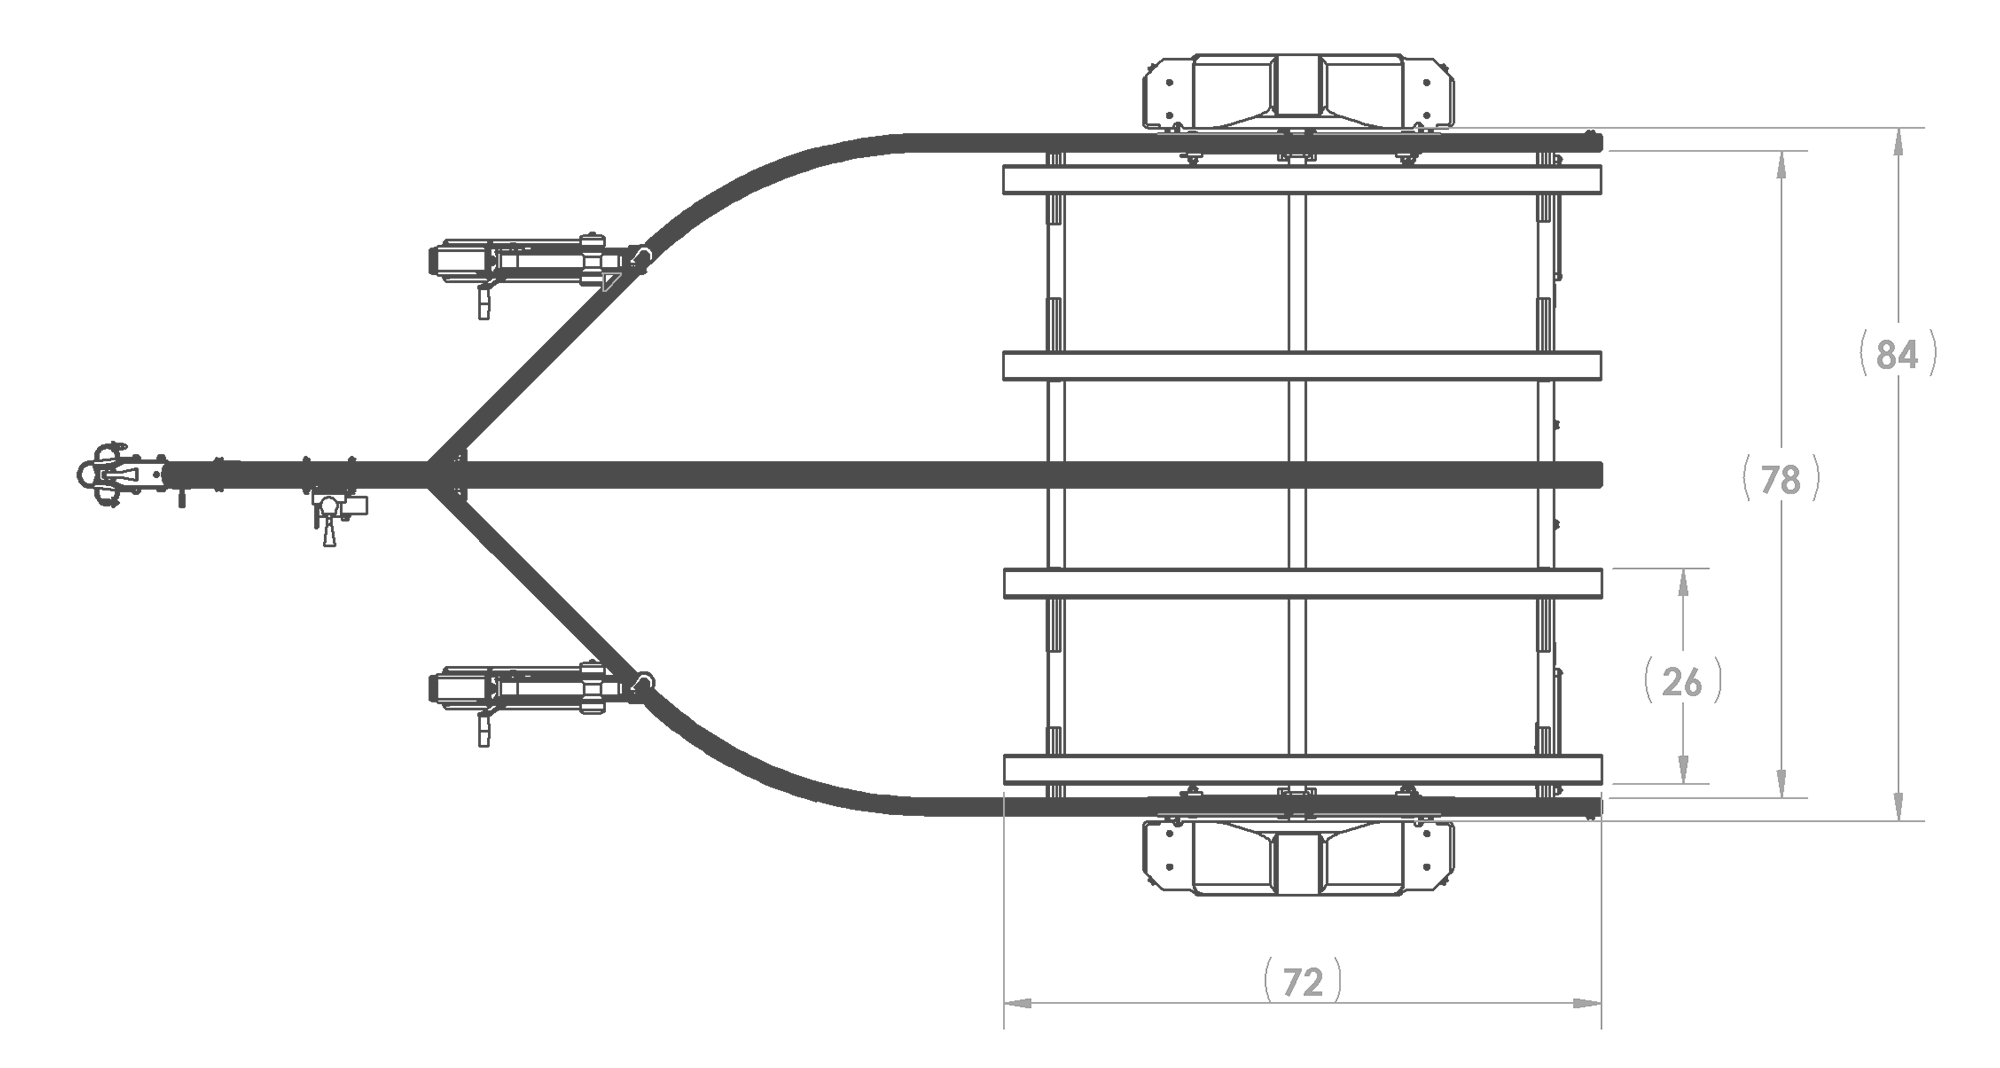 Karavan Trailer's Double Watercraft Aluminum Trailer w/Step Fender, model number WCA-2600-82, Top View Measurement